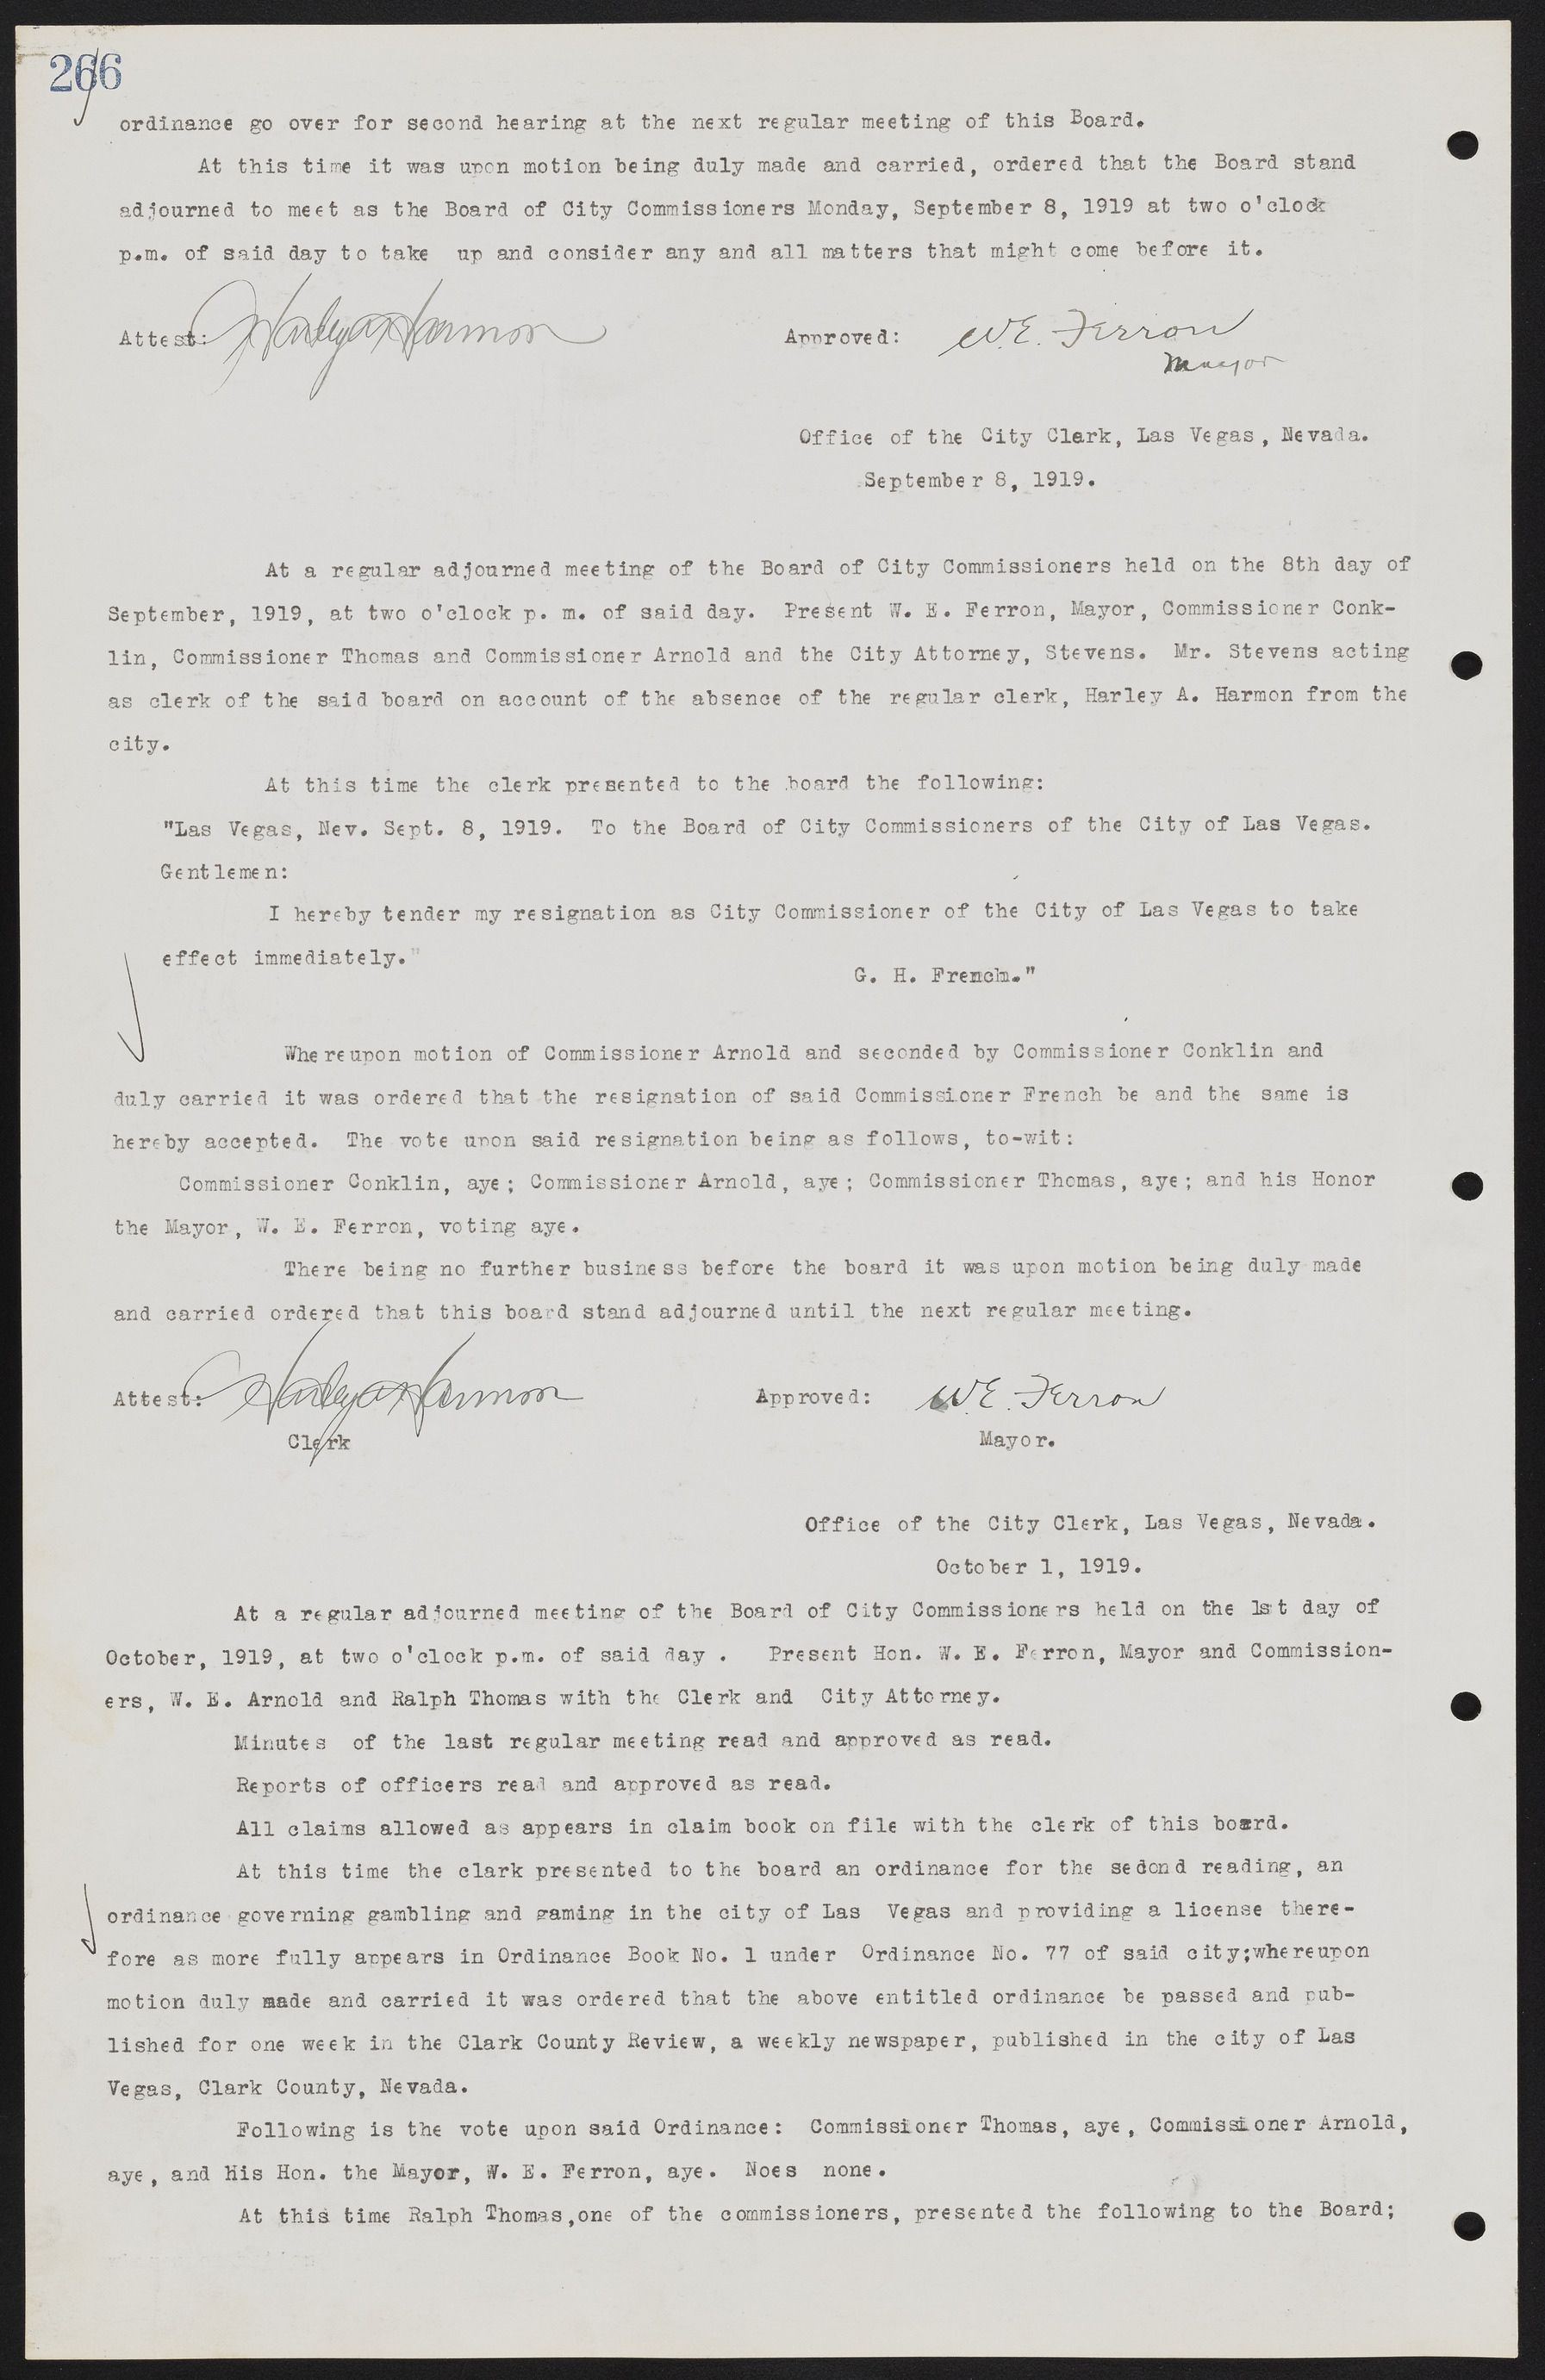 Las Vegas City Commission Minutes, June 22, 1911 to February 7, 1922, lvc000001-282